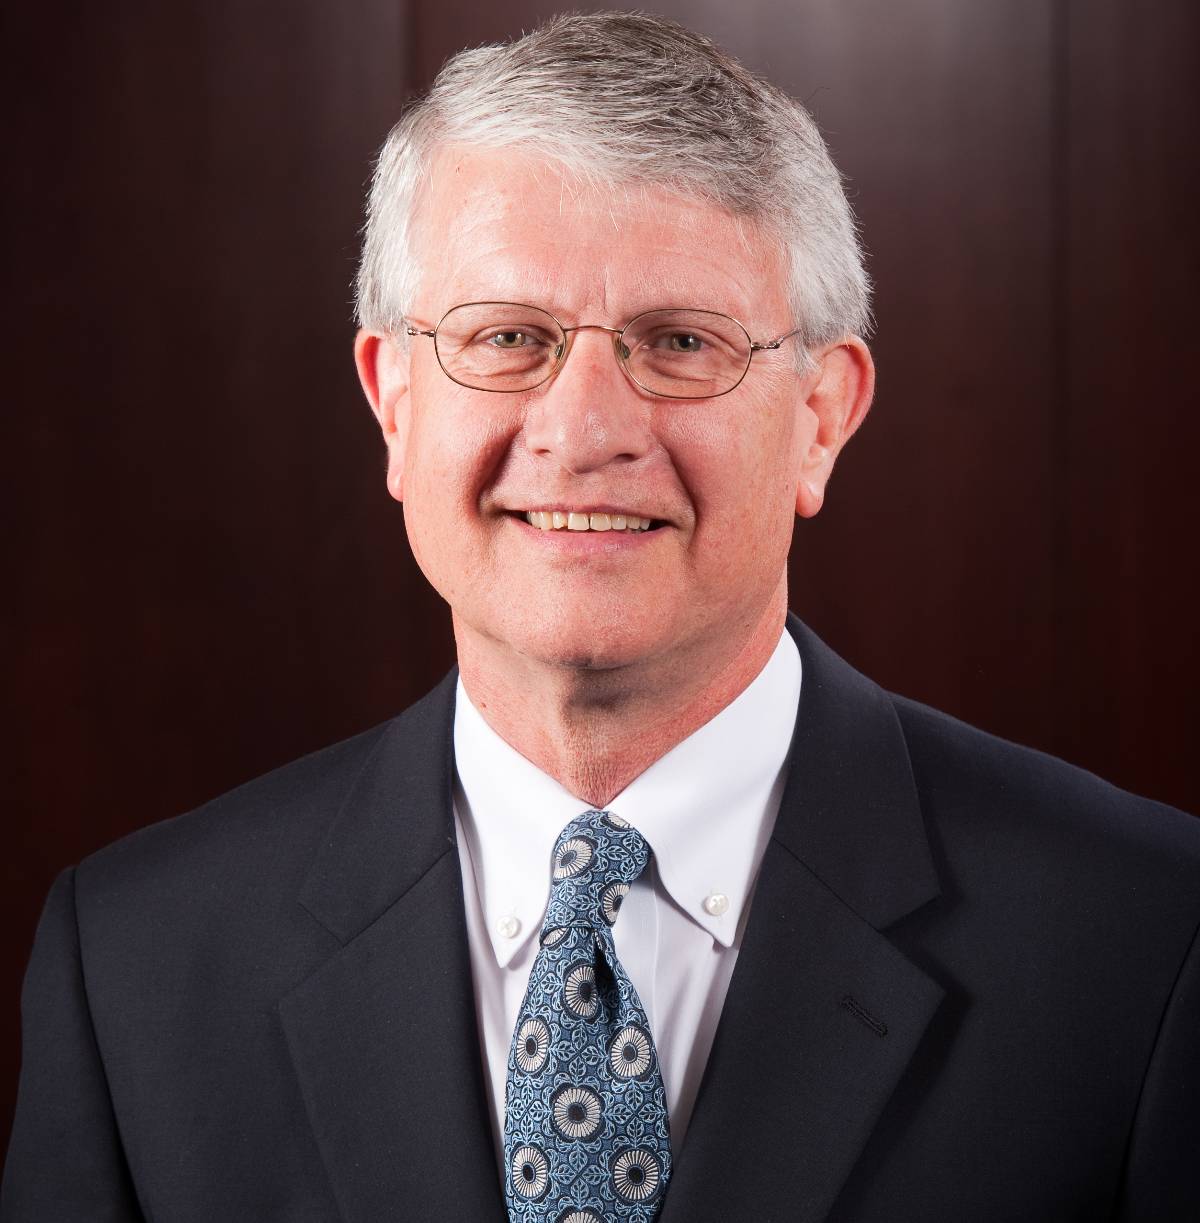 Andy Tompkins, interim president of WSU